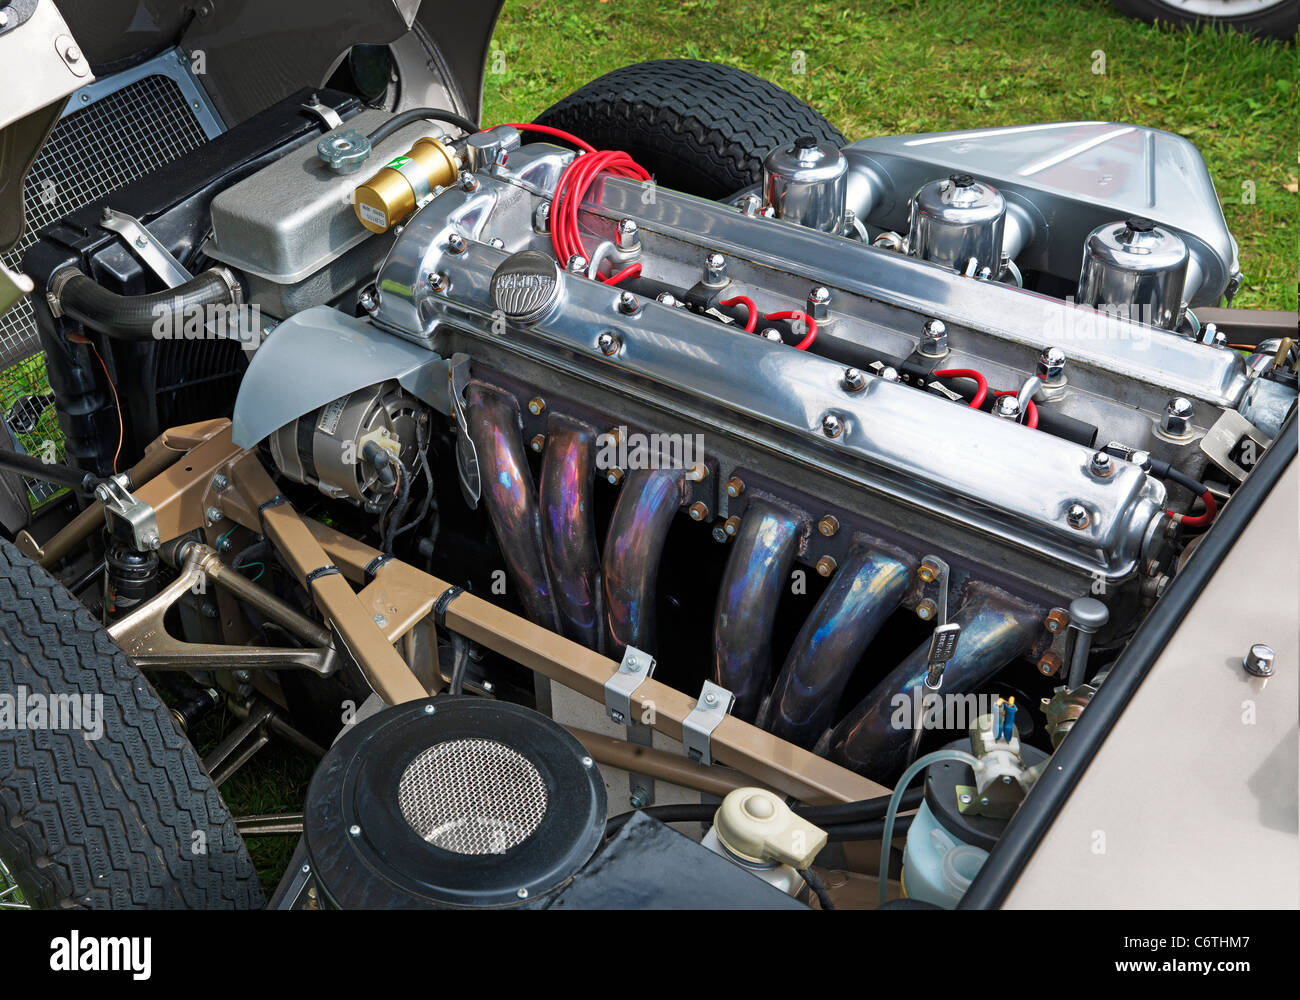 Jaguar E-Type engine Stock Photo